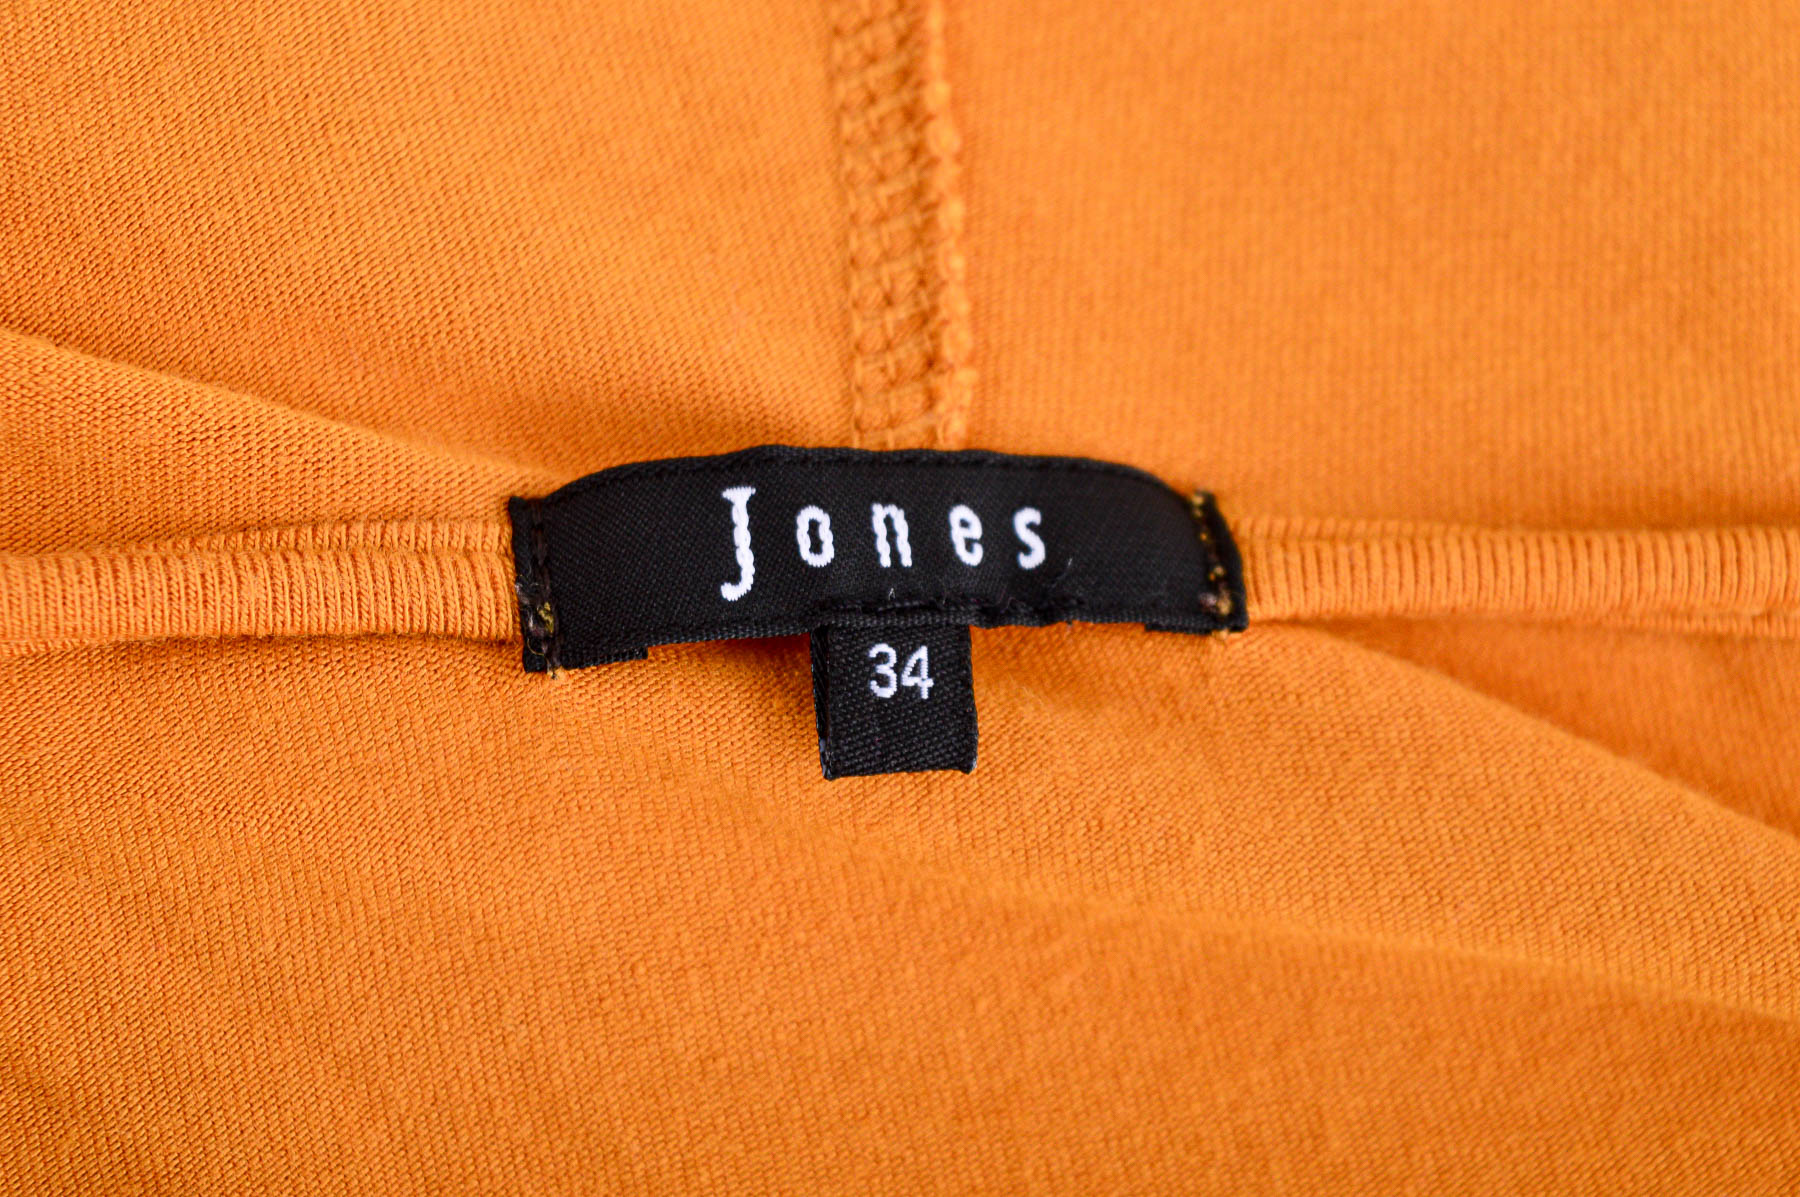 Women's blouse - Jones - 2